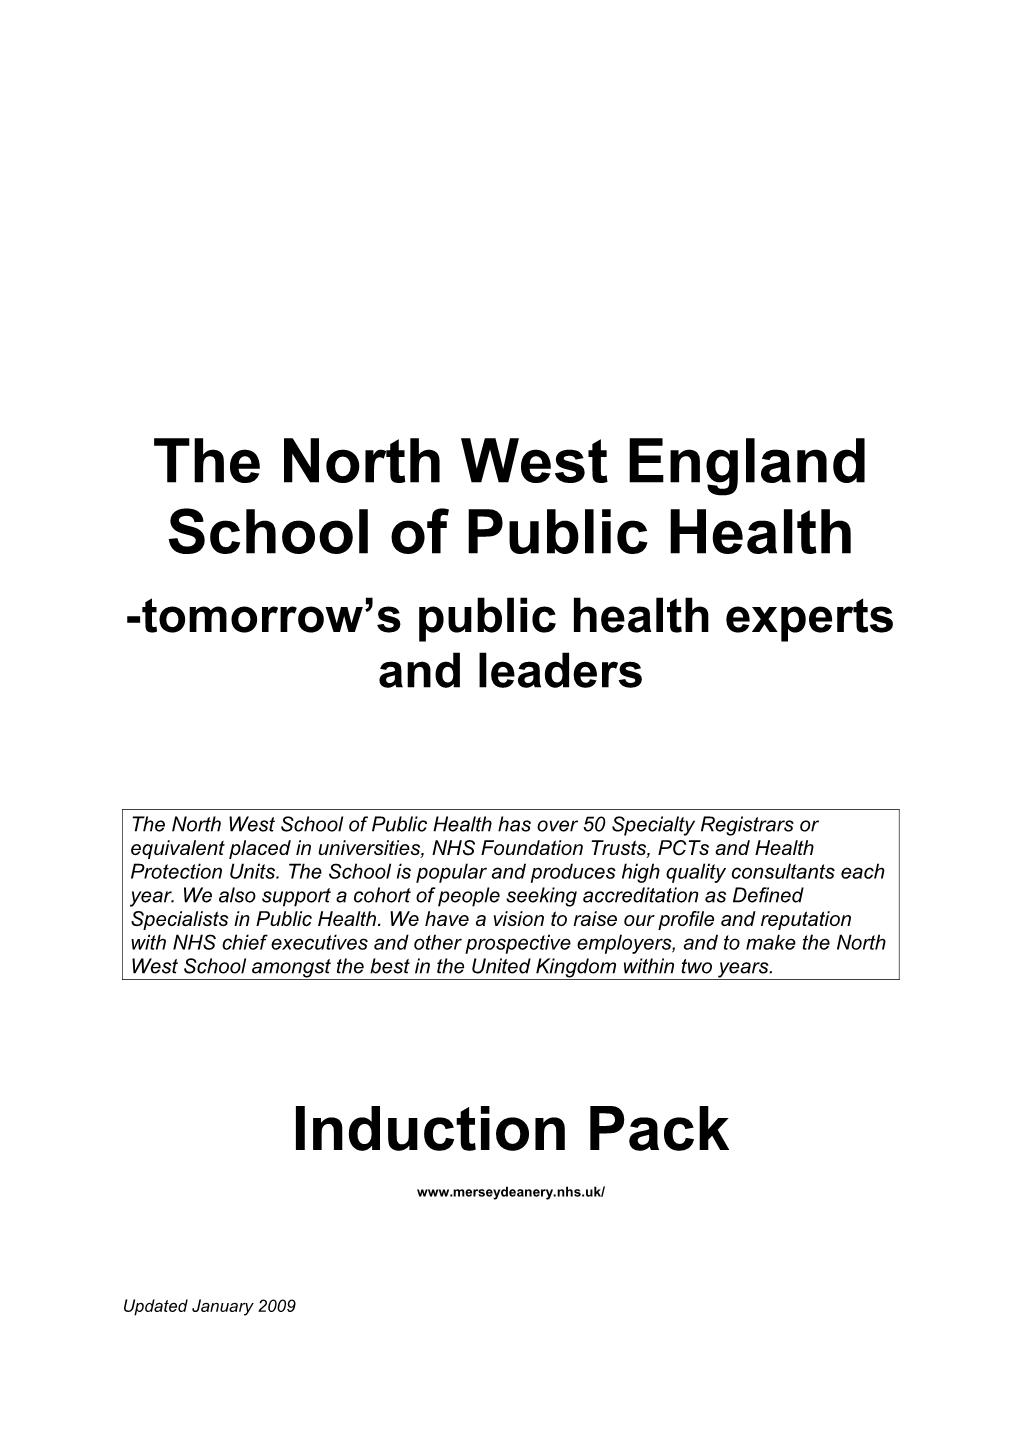 The North West England School of Public Health